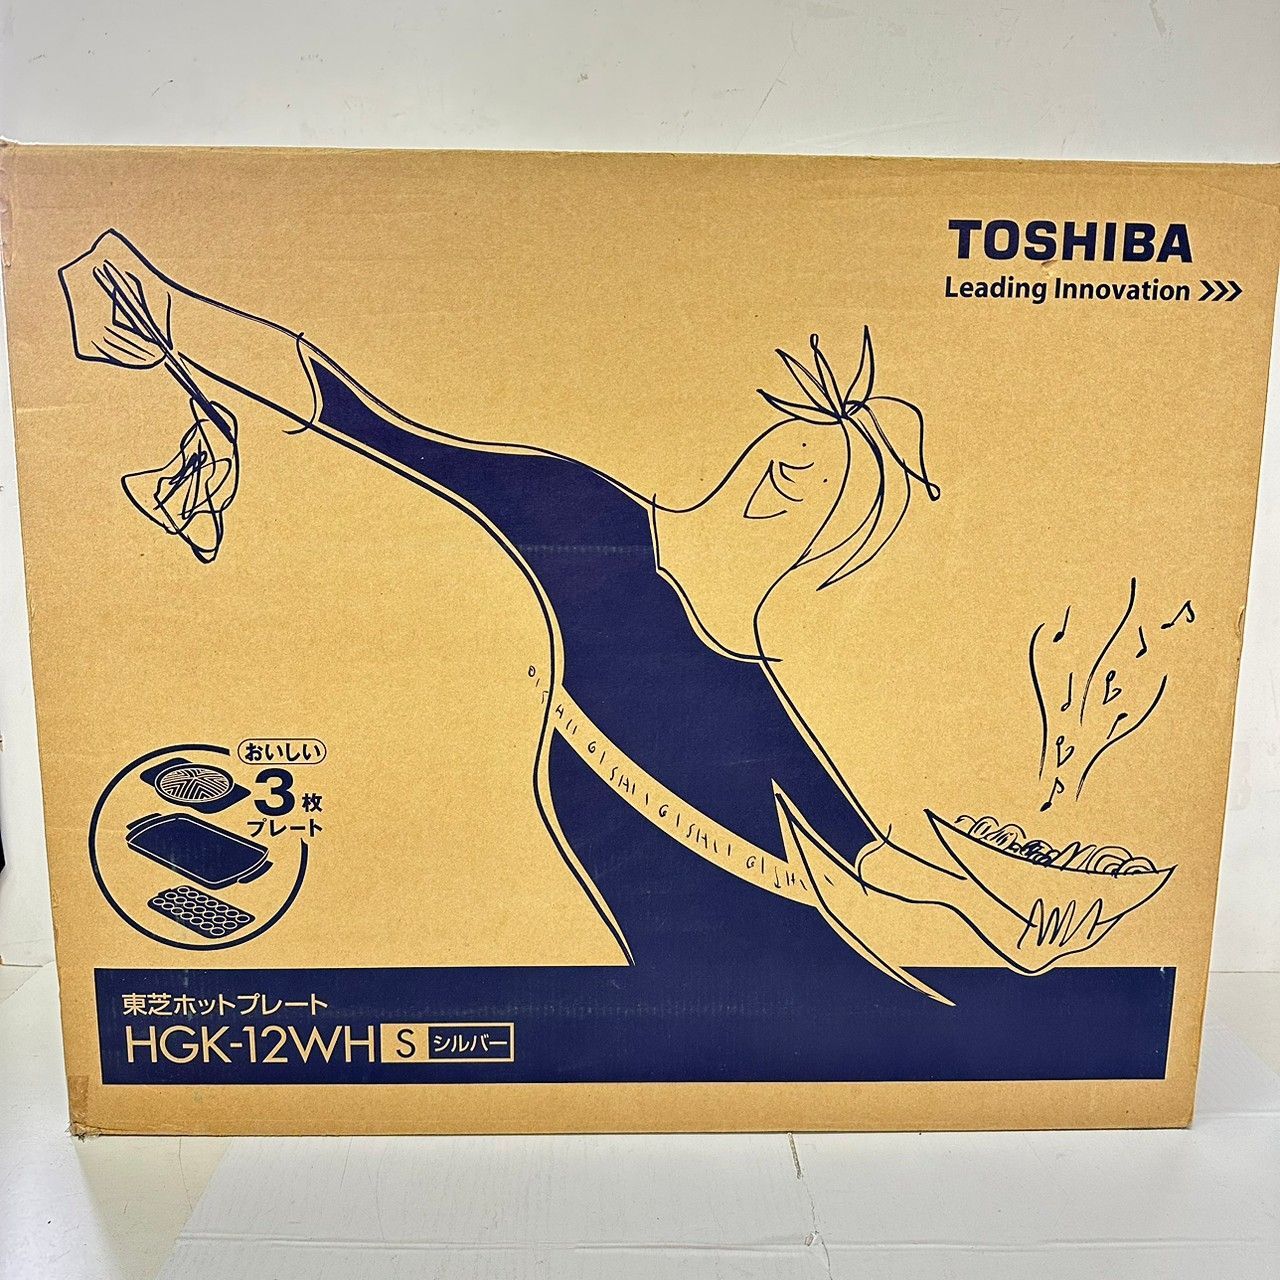 TOSHIBAホットプレート - 調理機器